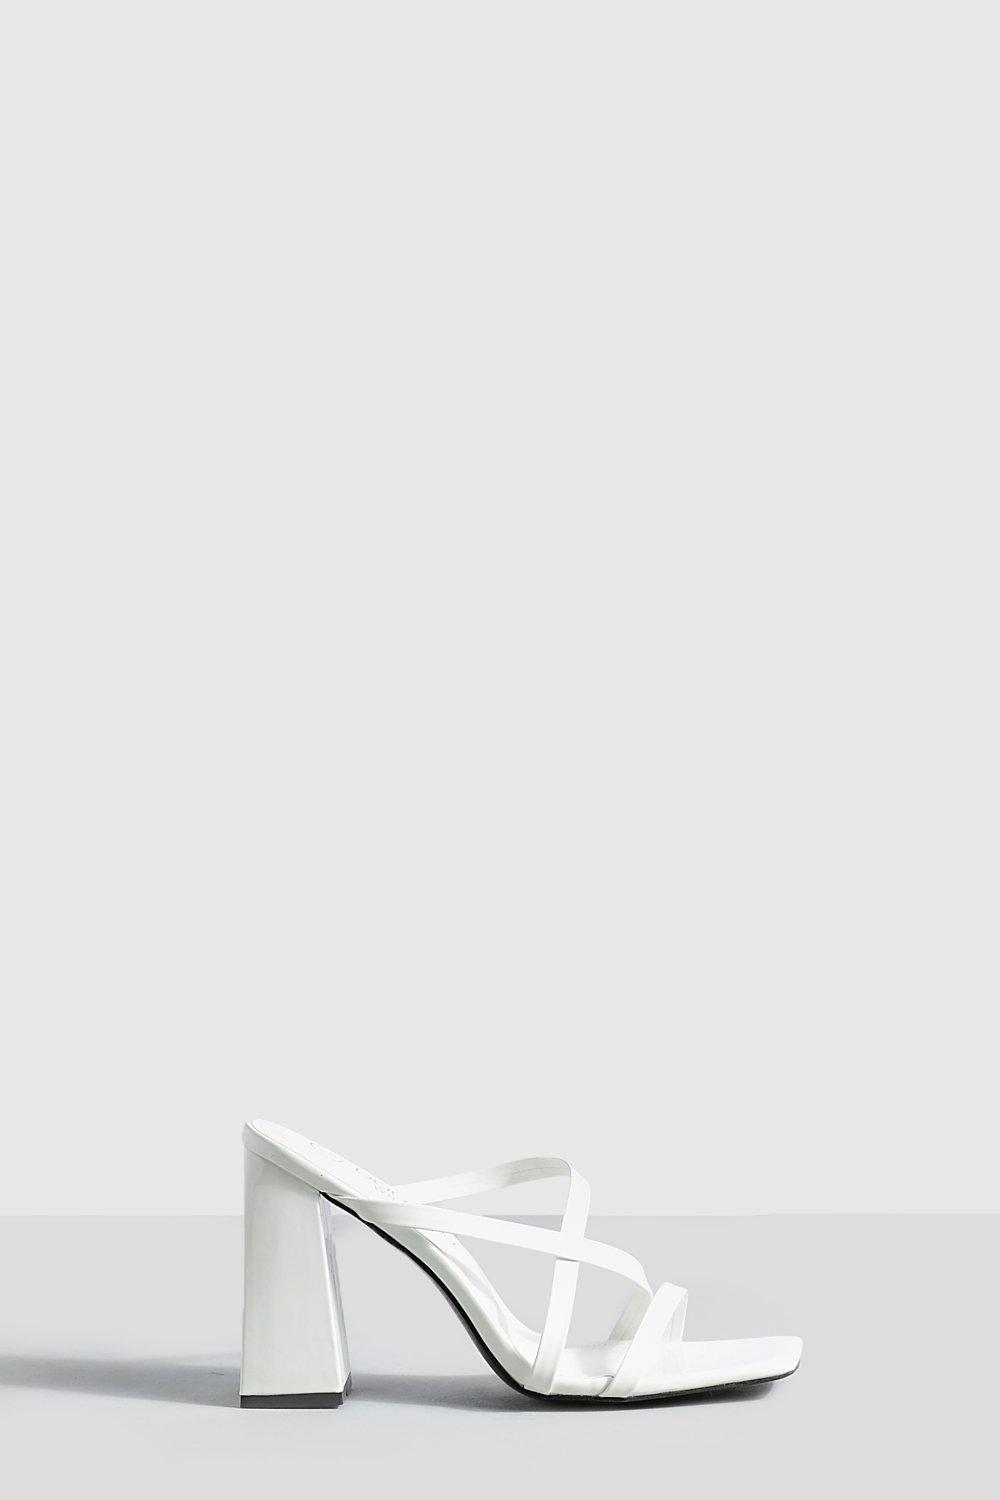 Image of Sandali Mules a calzata ampia a punta quadrata con tacco a blocco, Bianco